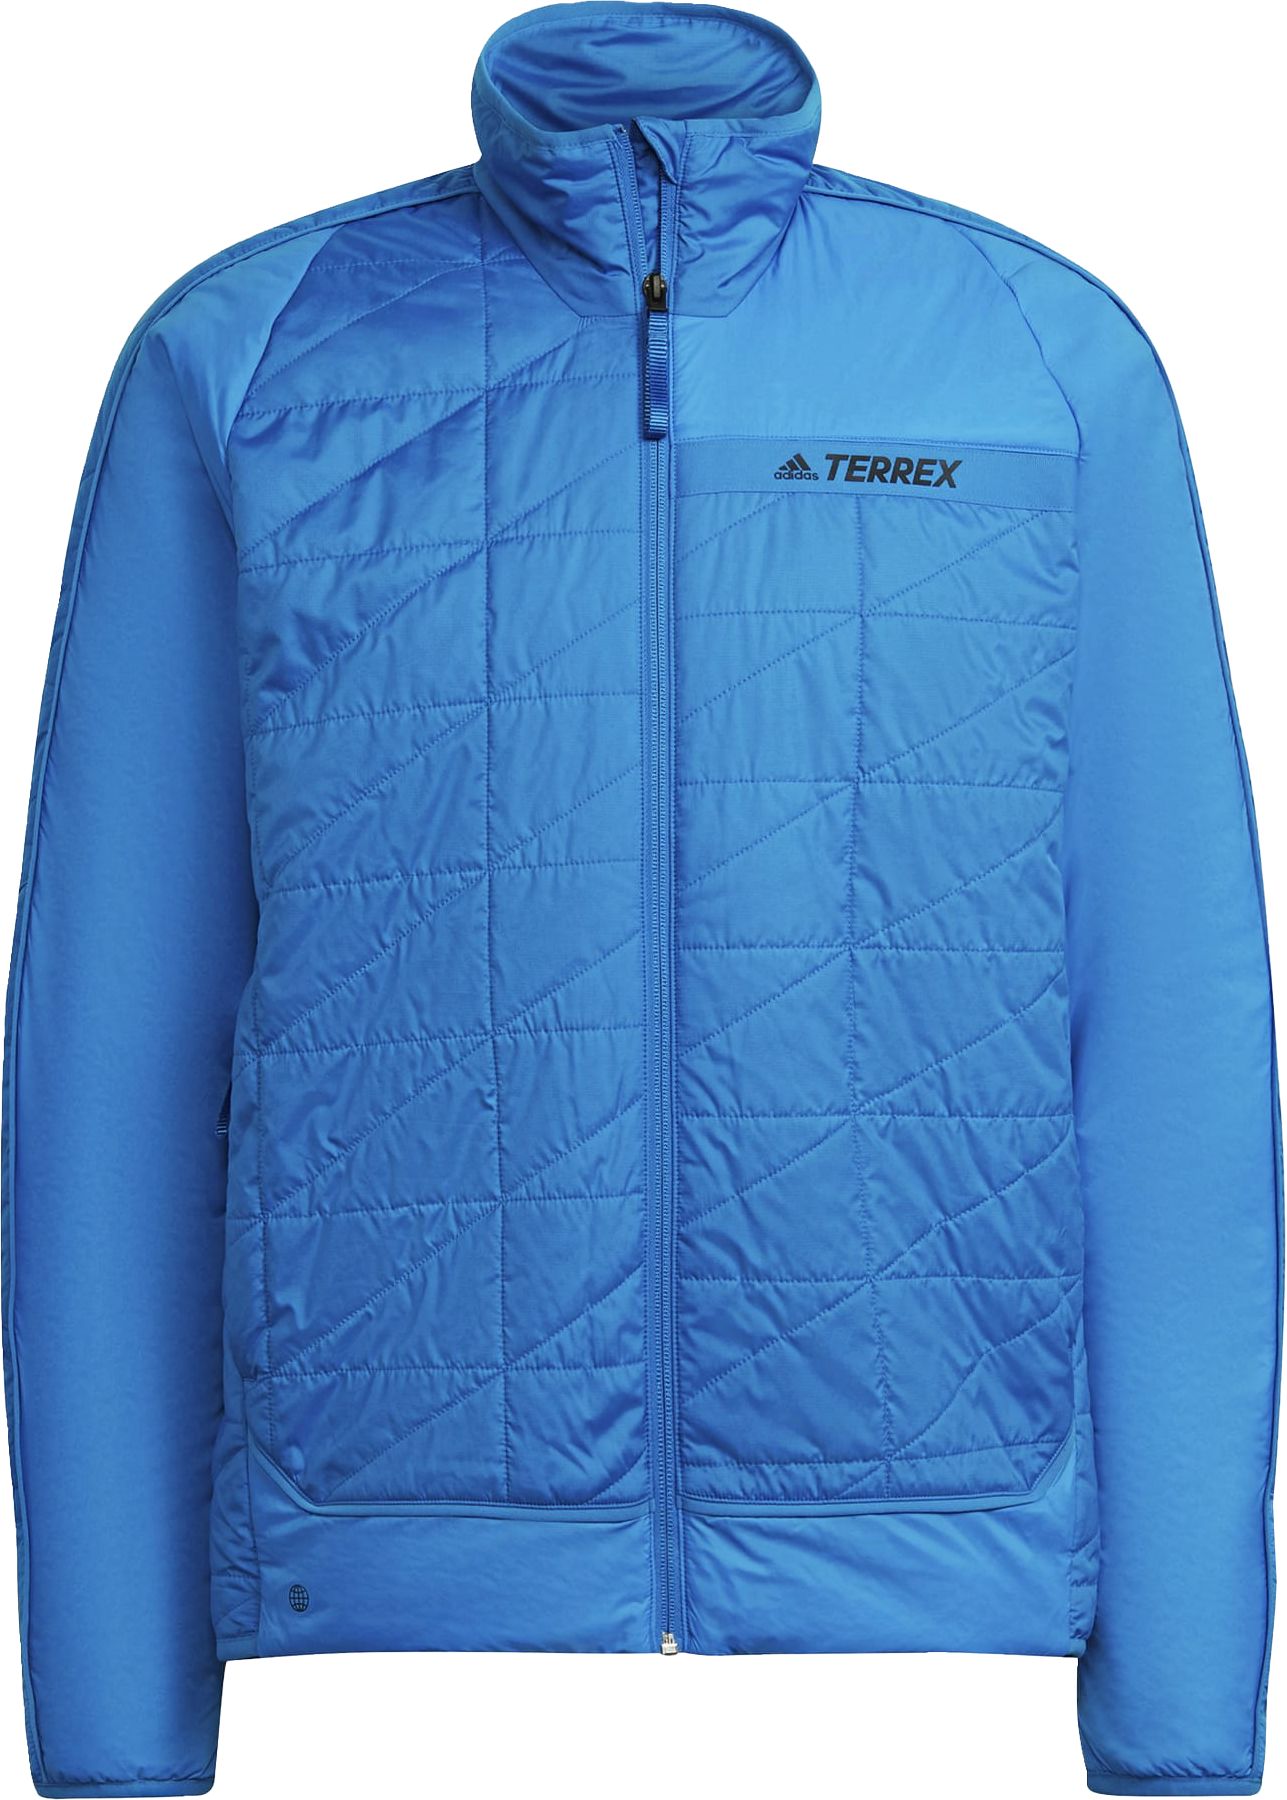 ADIDAS, Terrex Multi Synthetic Insulated Jacket